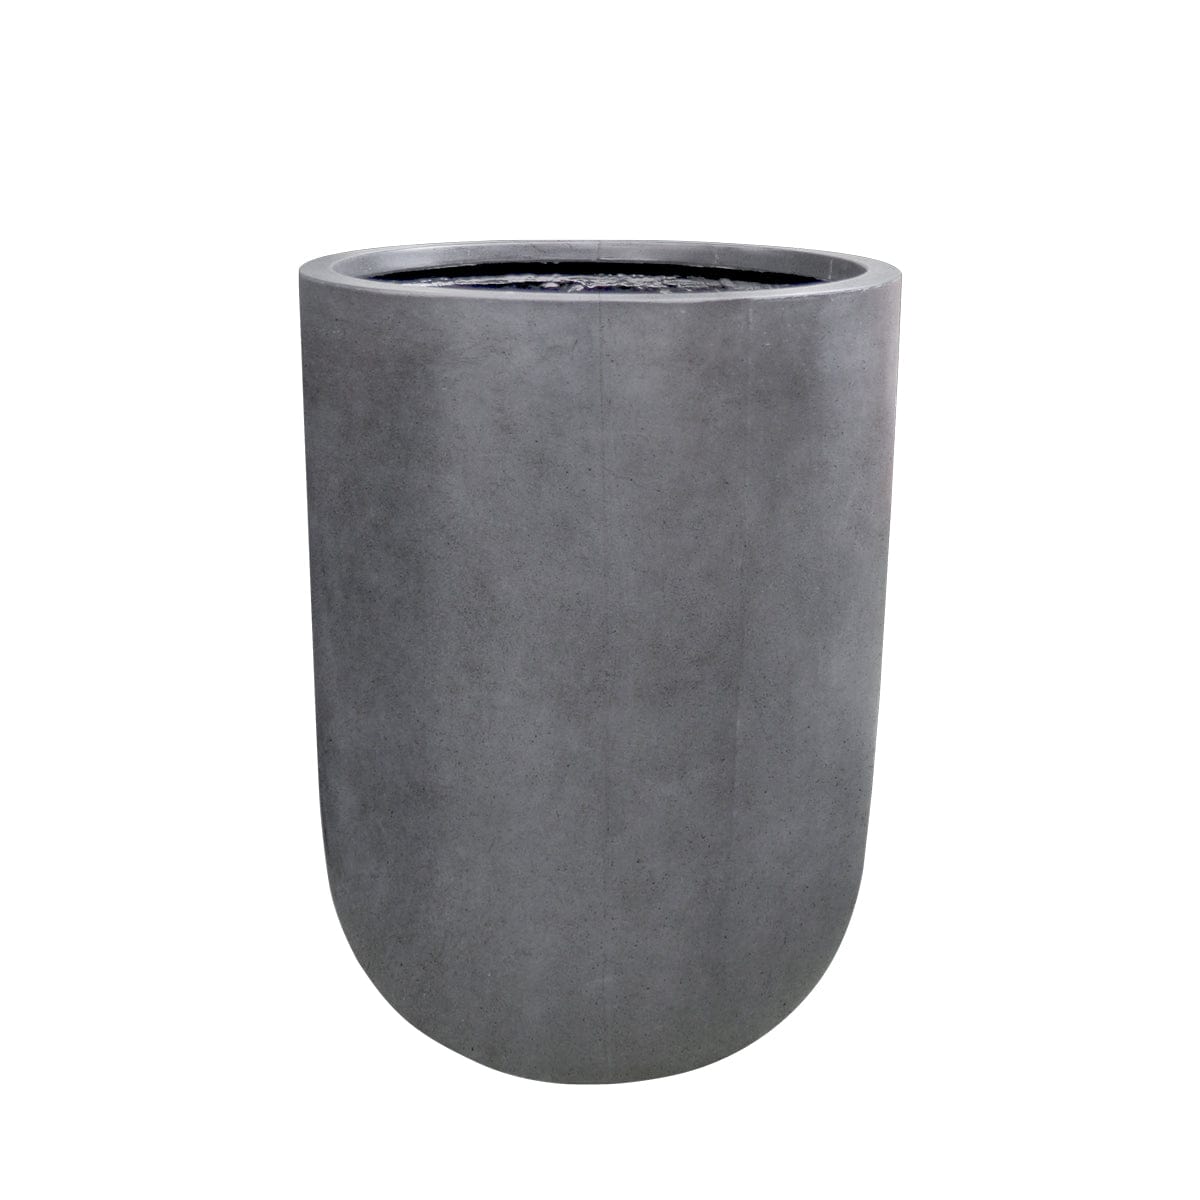 Oreti Weathered Cement Planter - Medium PRE ORDER Little & Fox